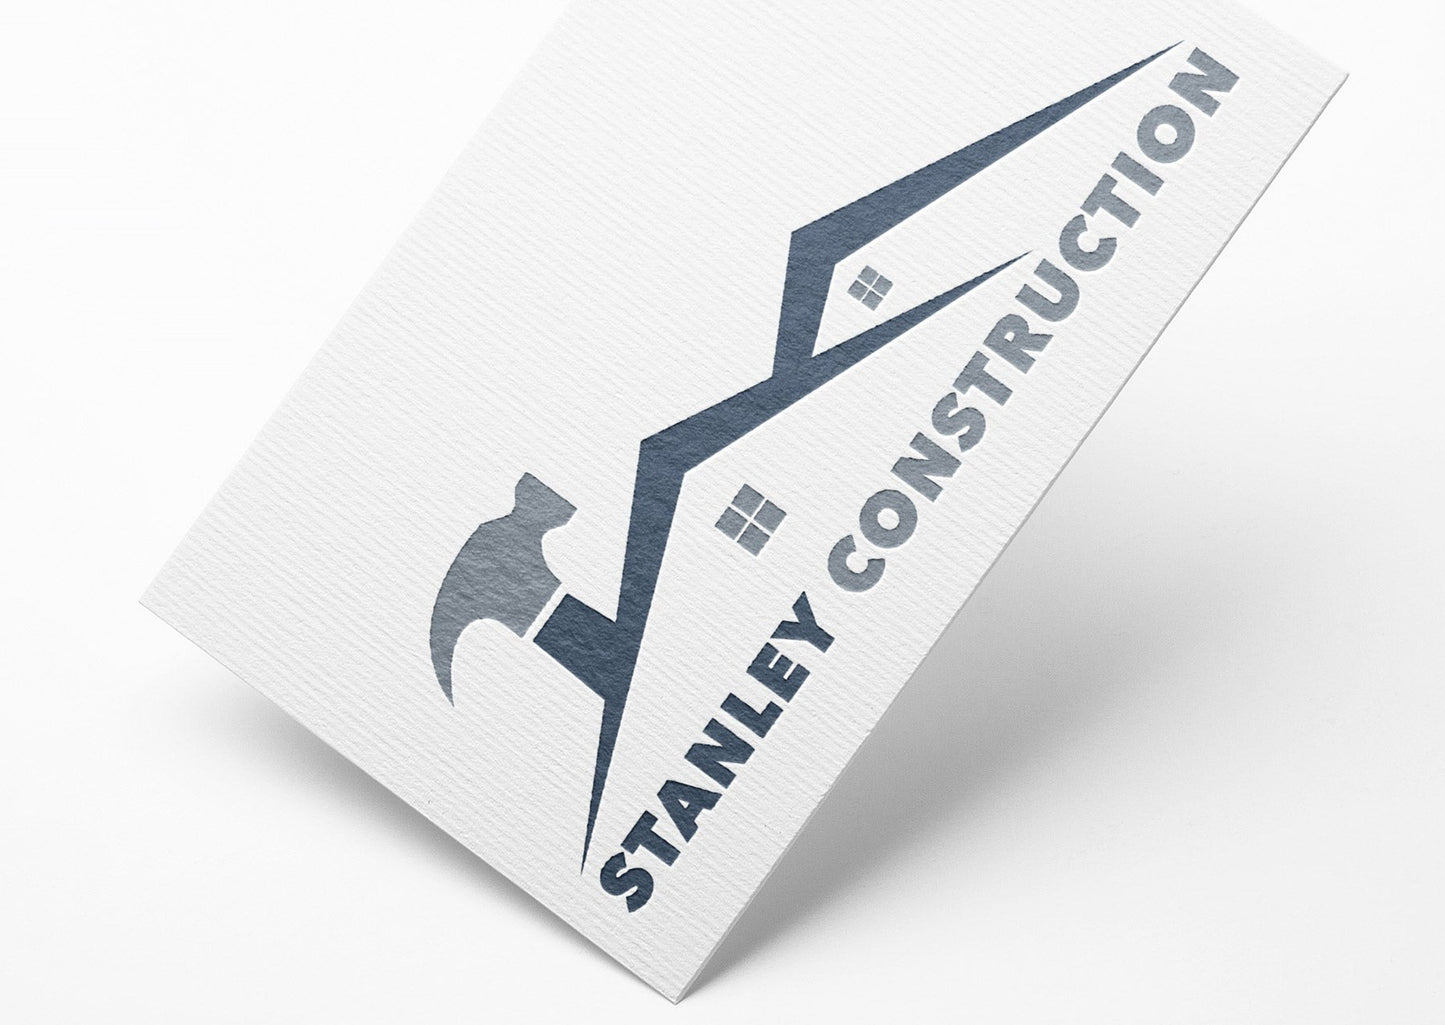 Logo Design - Construction Company | Construction Business | Hammer Design | House Design